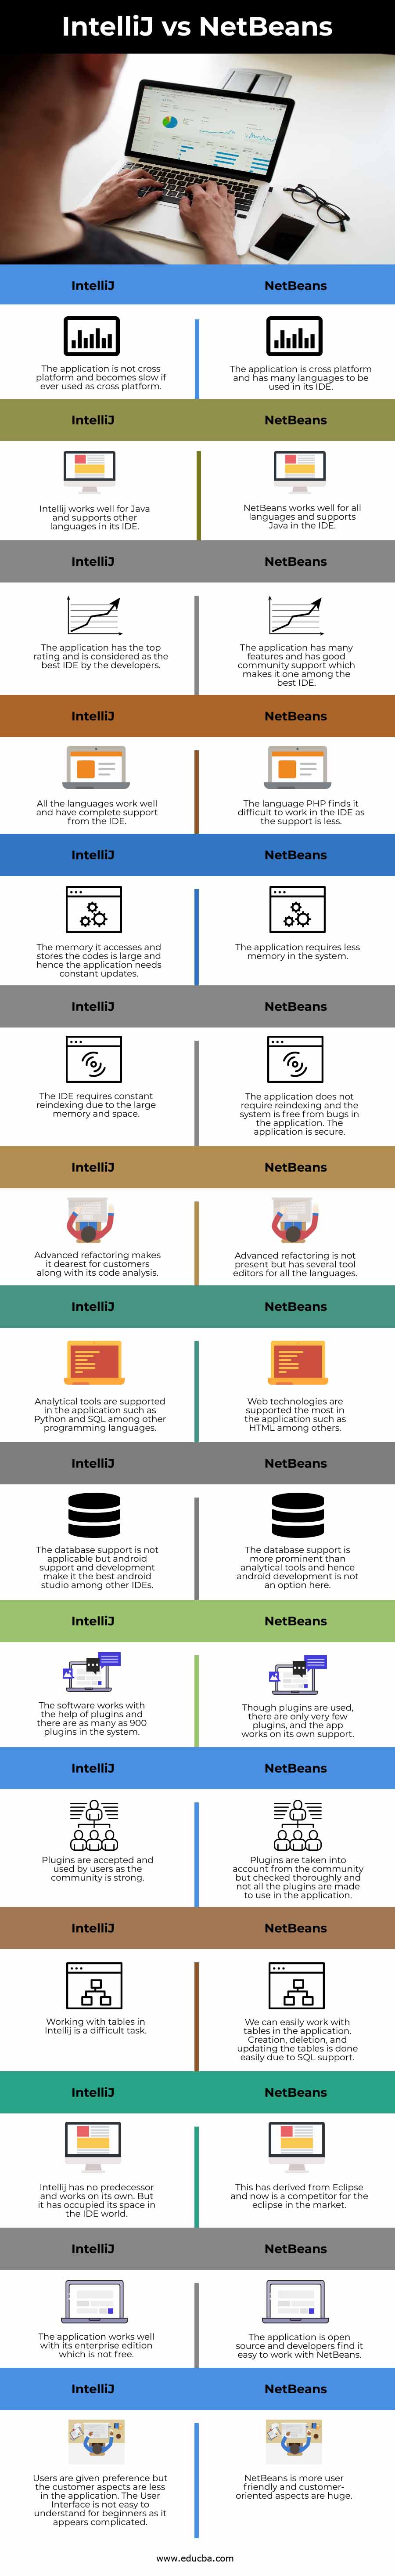 IntelliJ vs NetBeans info